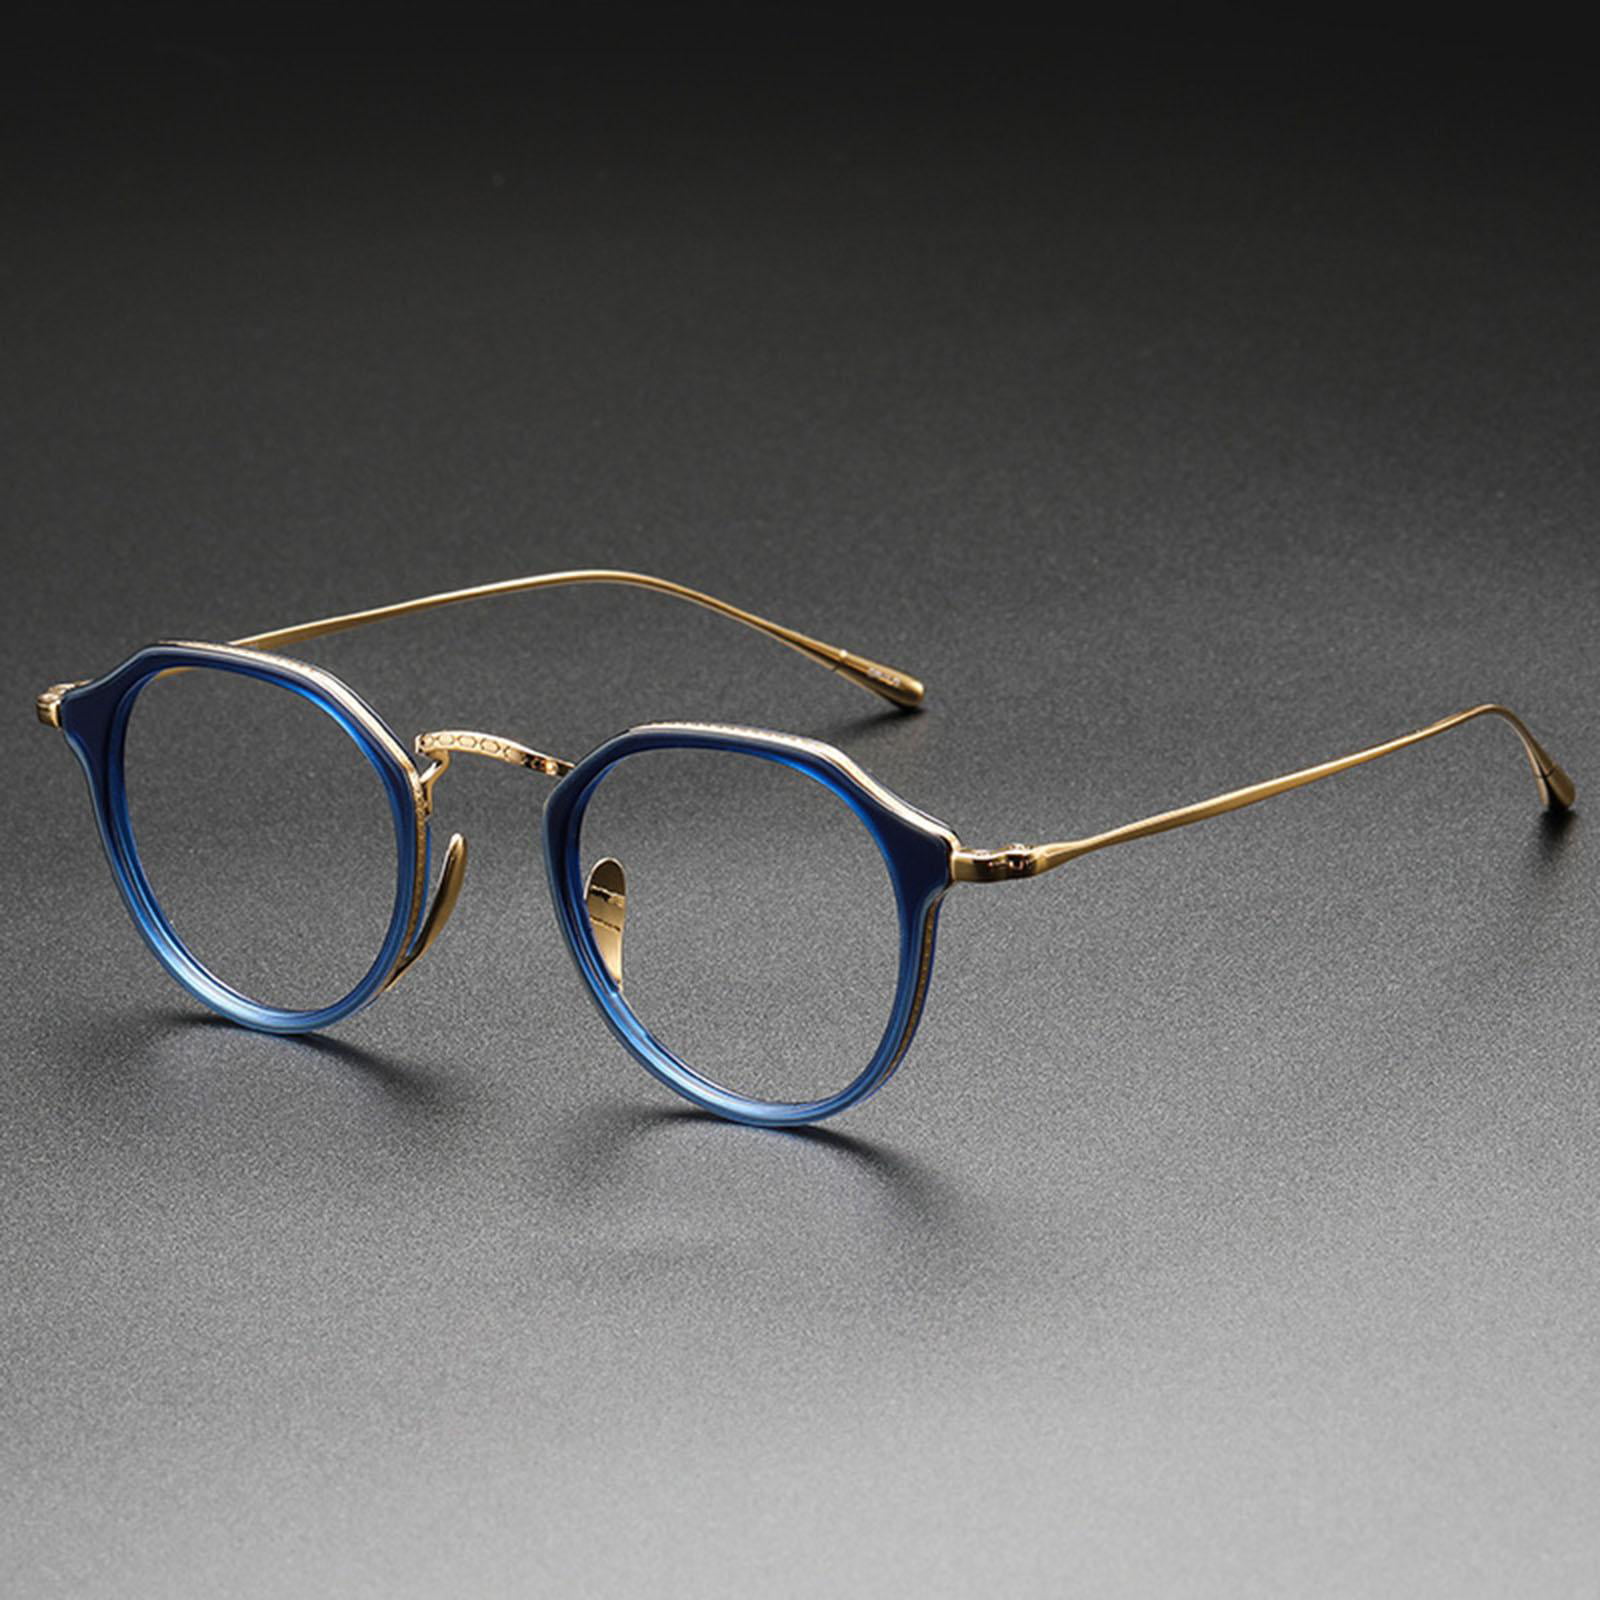 Muzz Men's Full Rim Round Titanium Frame Eyeglasses 10118 | Eyeglasses,  Stylish eyeglasses, Fashion eyeglasses